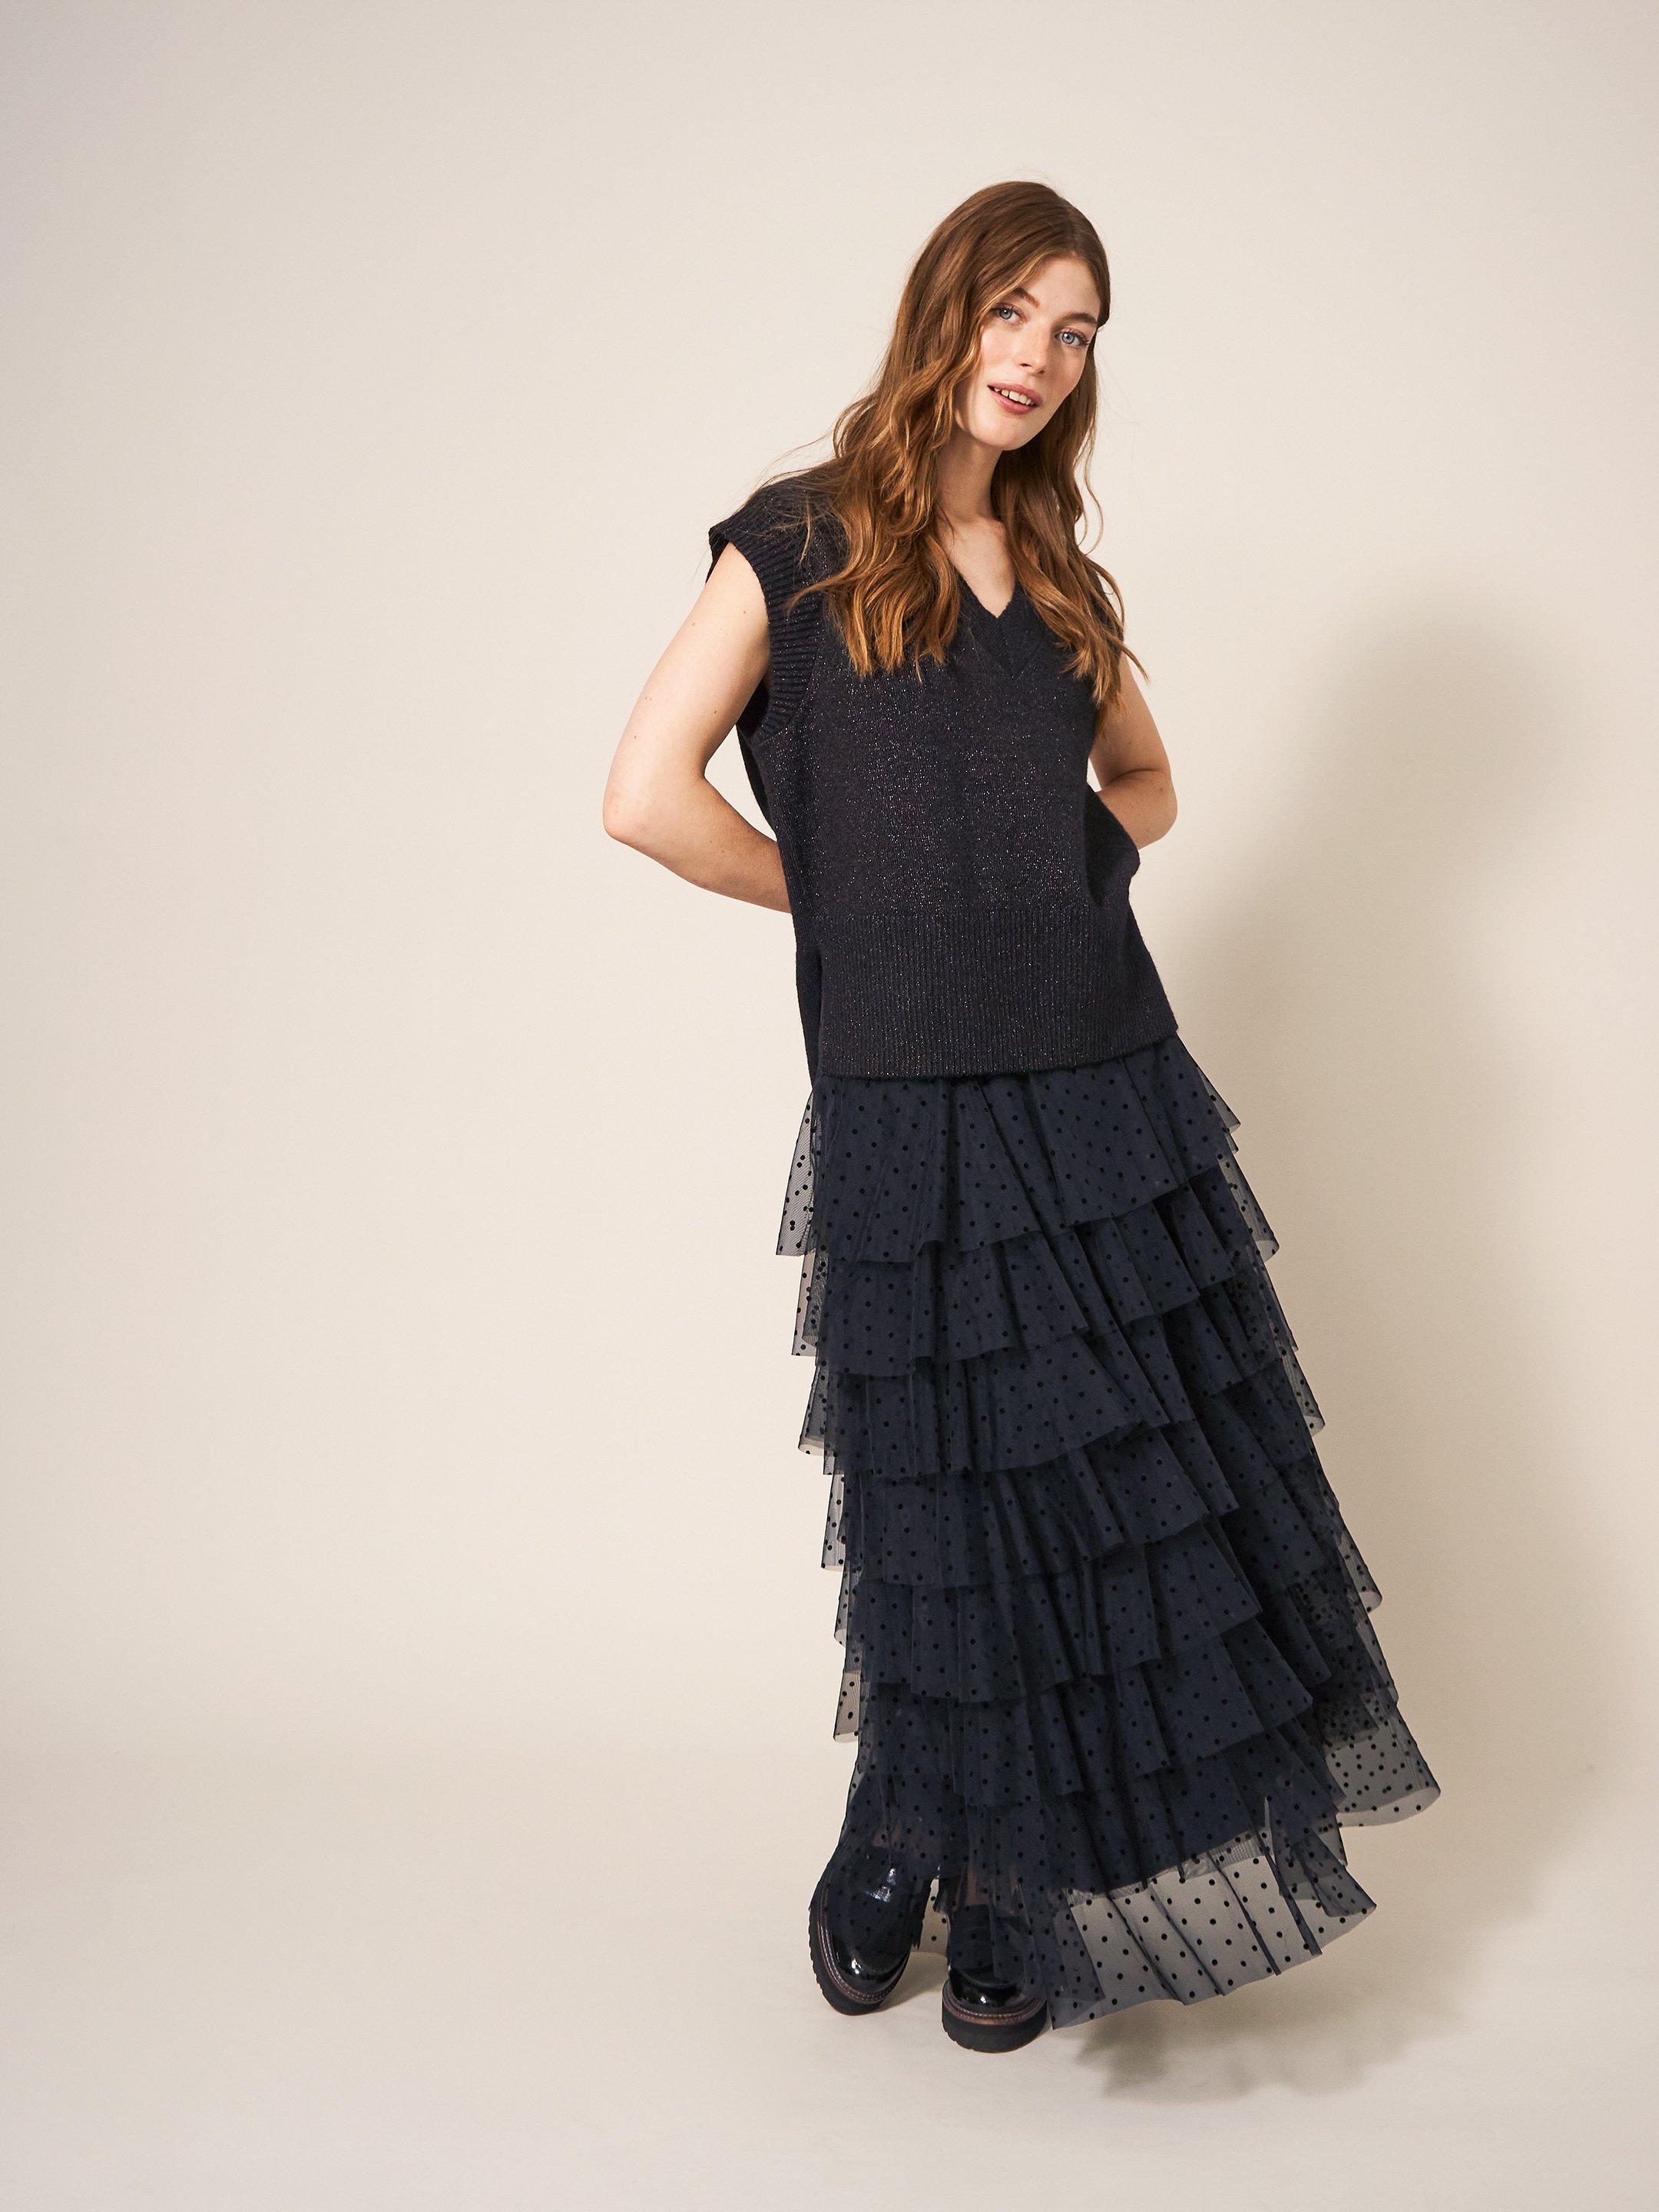 Rowan Spot Tulle Skirt in PURE BLK - MODEL FRONT